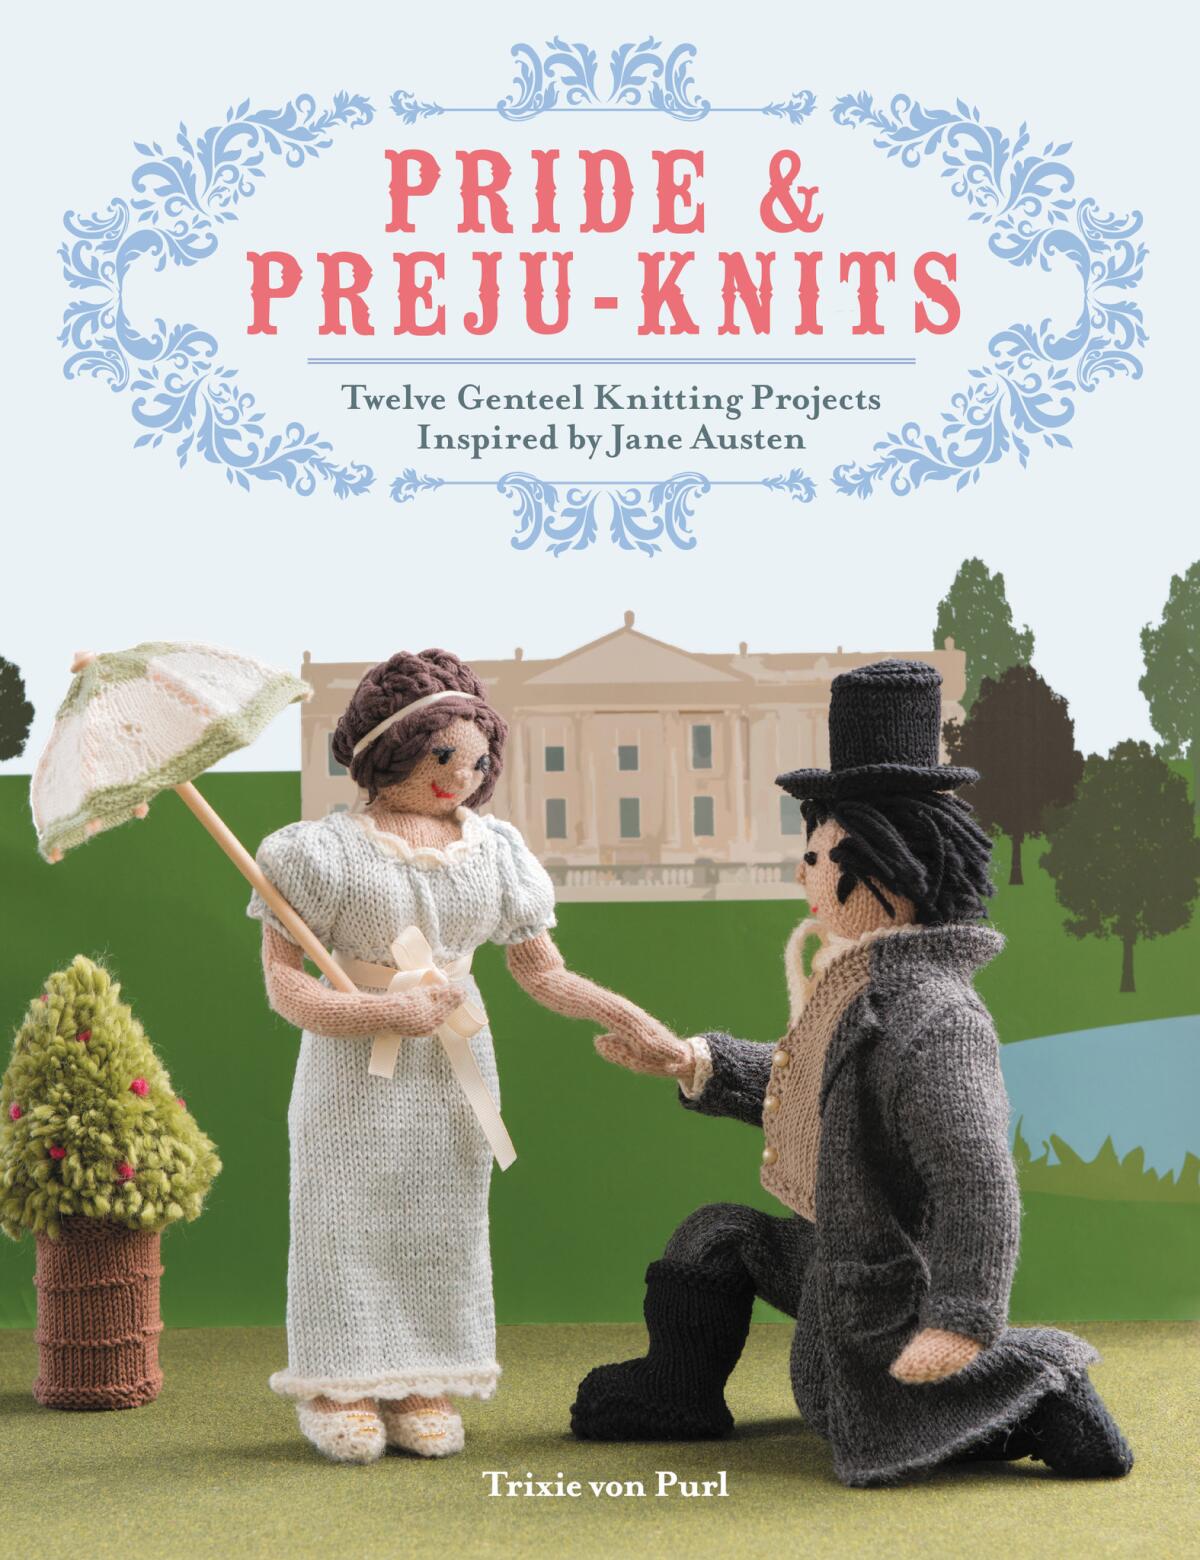 "Pride & Preju-Knits: Twelve Genteel Knitting Projects Inspired by Jane Austen" by Trixie von Purl